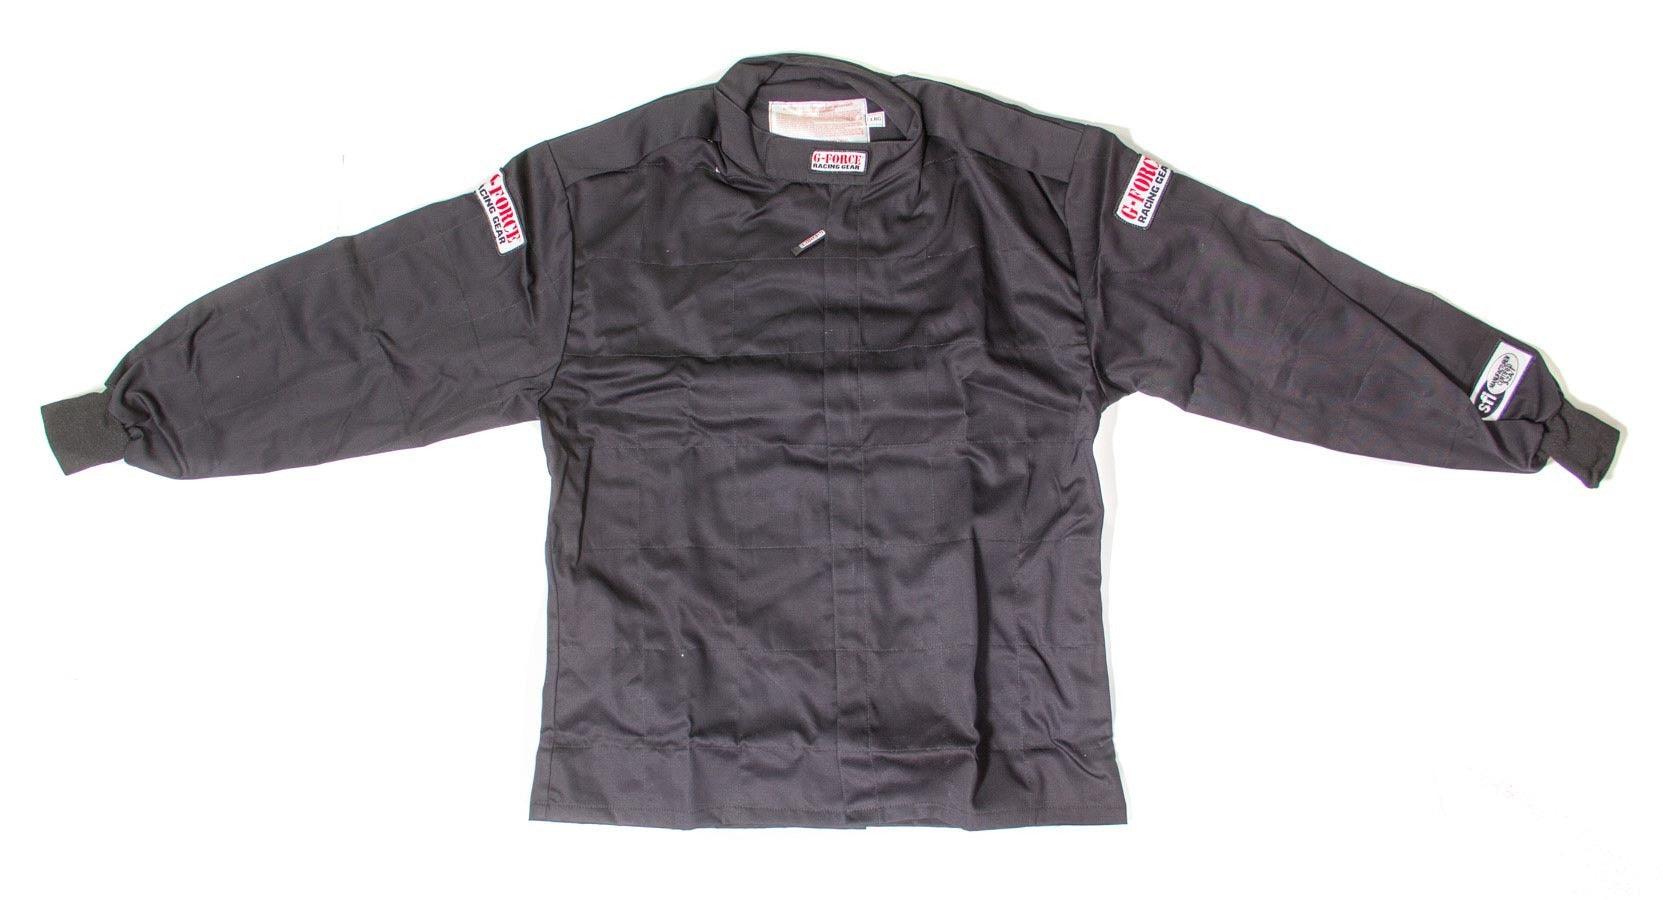 GF125 Jacket Only Medium Black - Burlile Performance Products